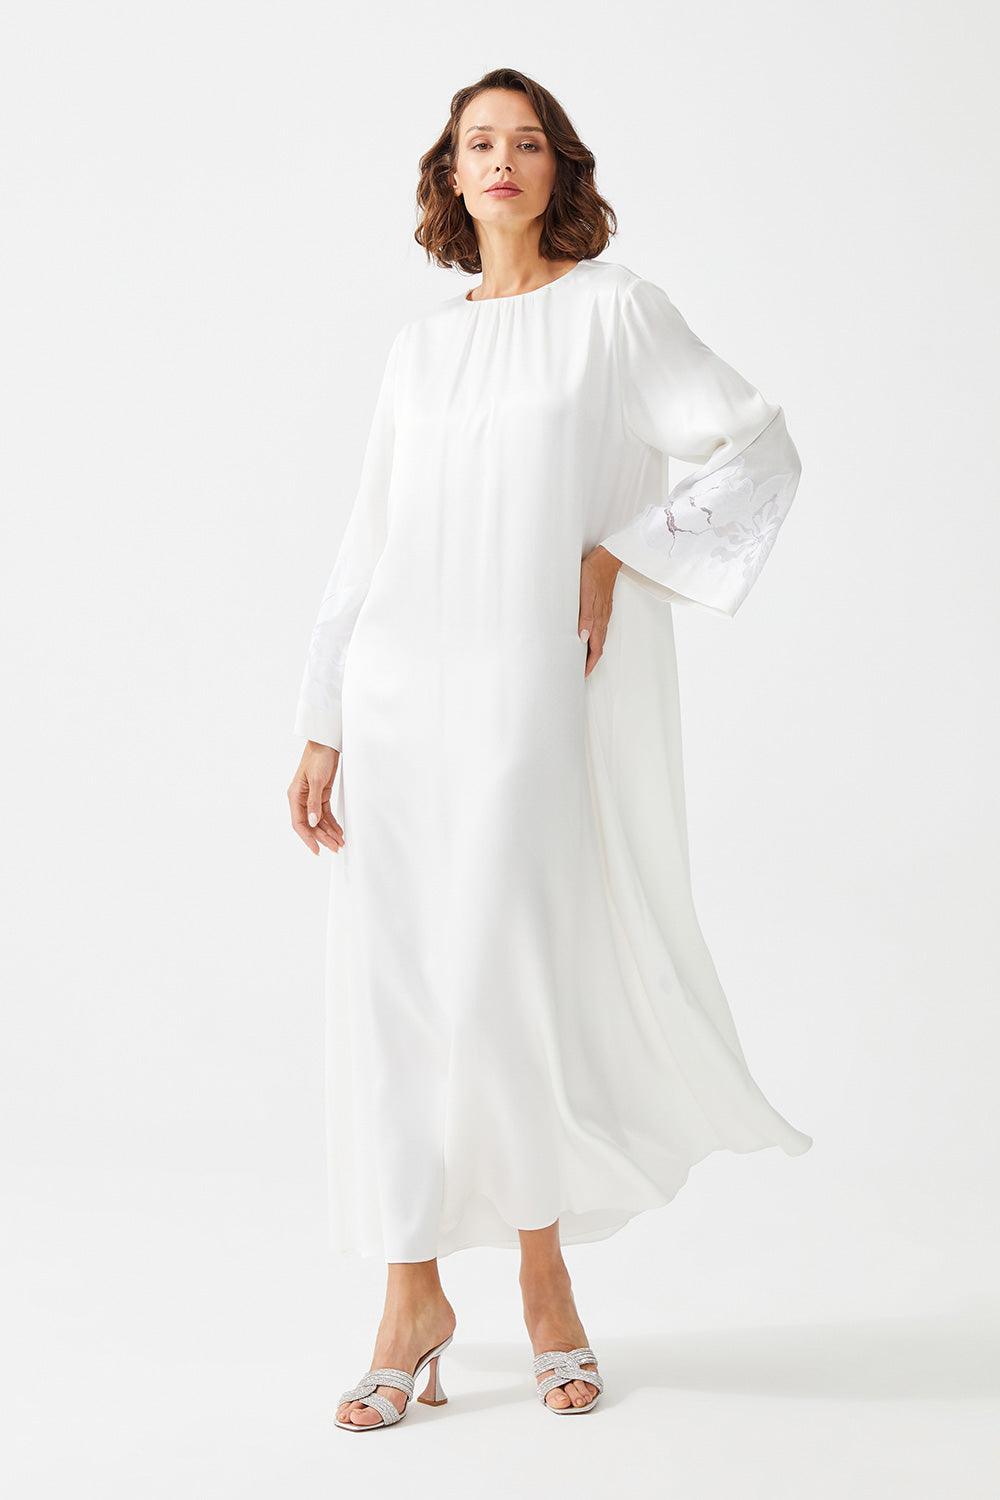 Tuba Long Rayon Trimmed Dress - Off White - Bocan